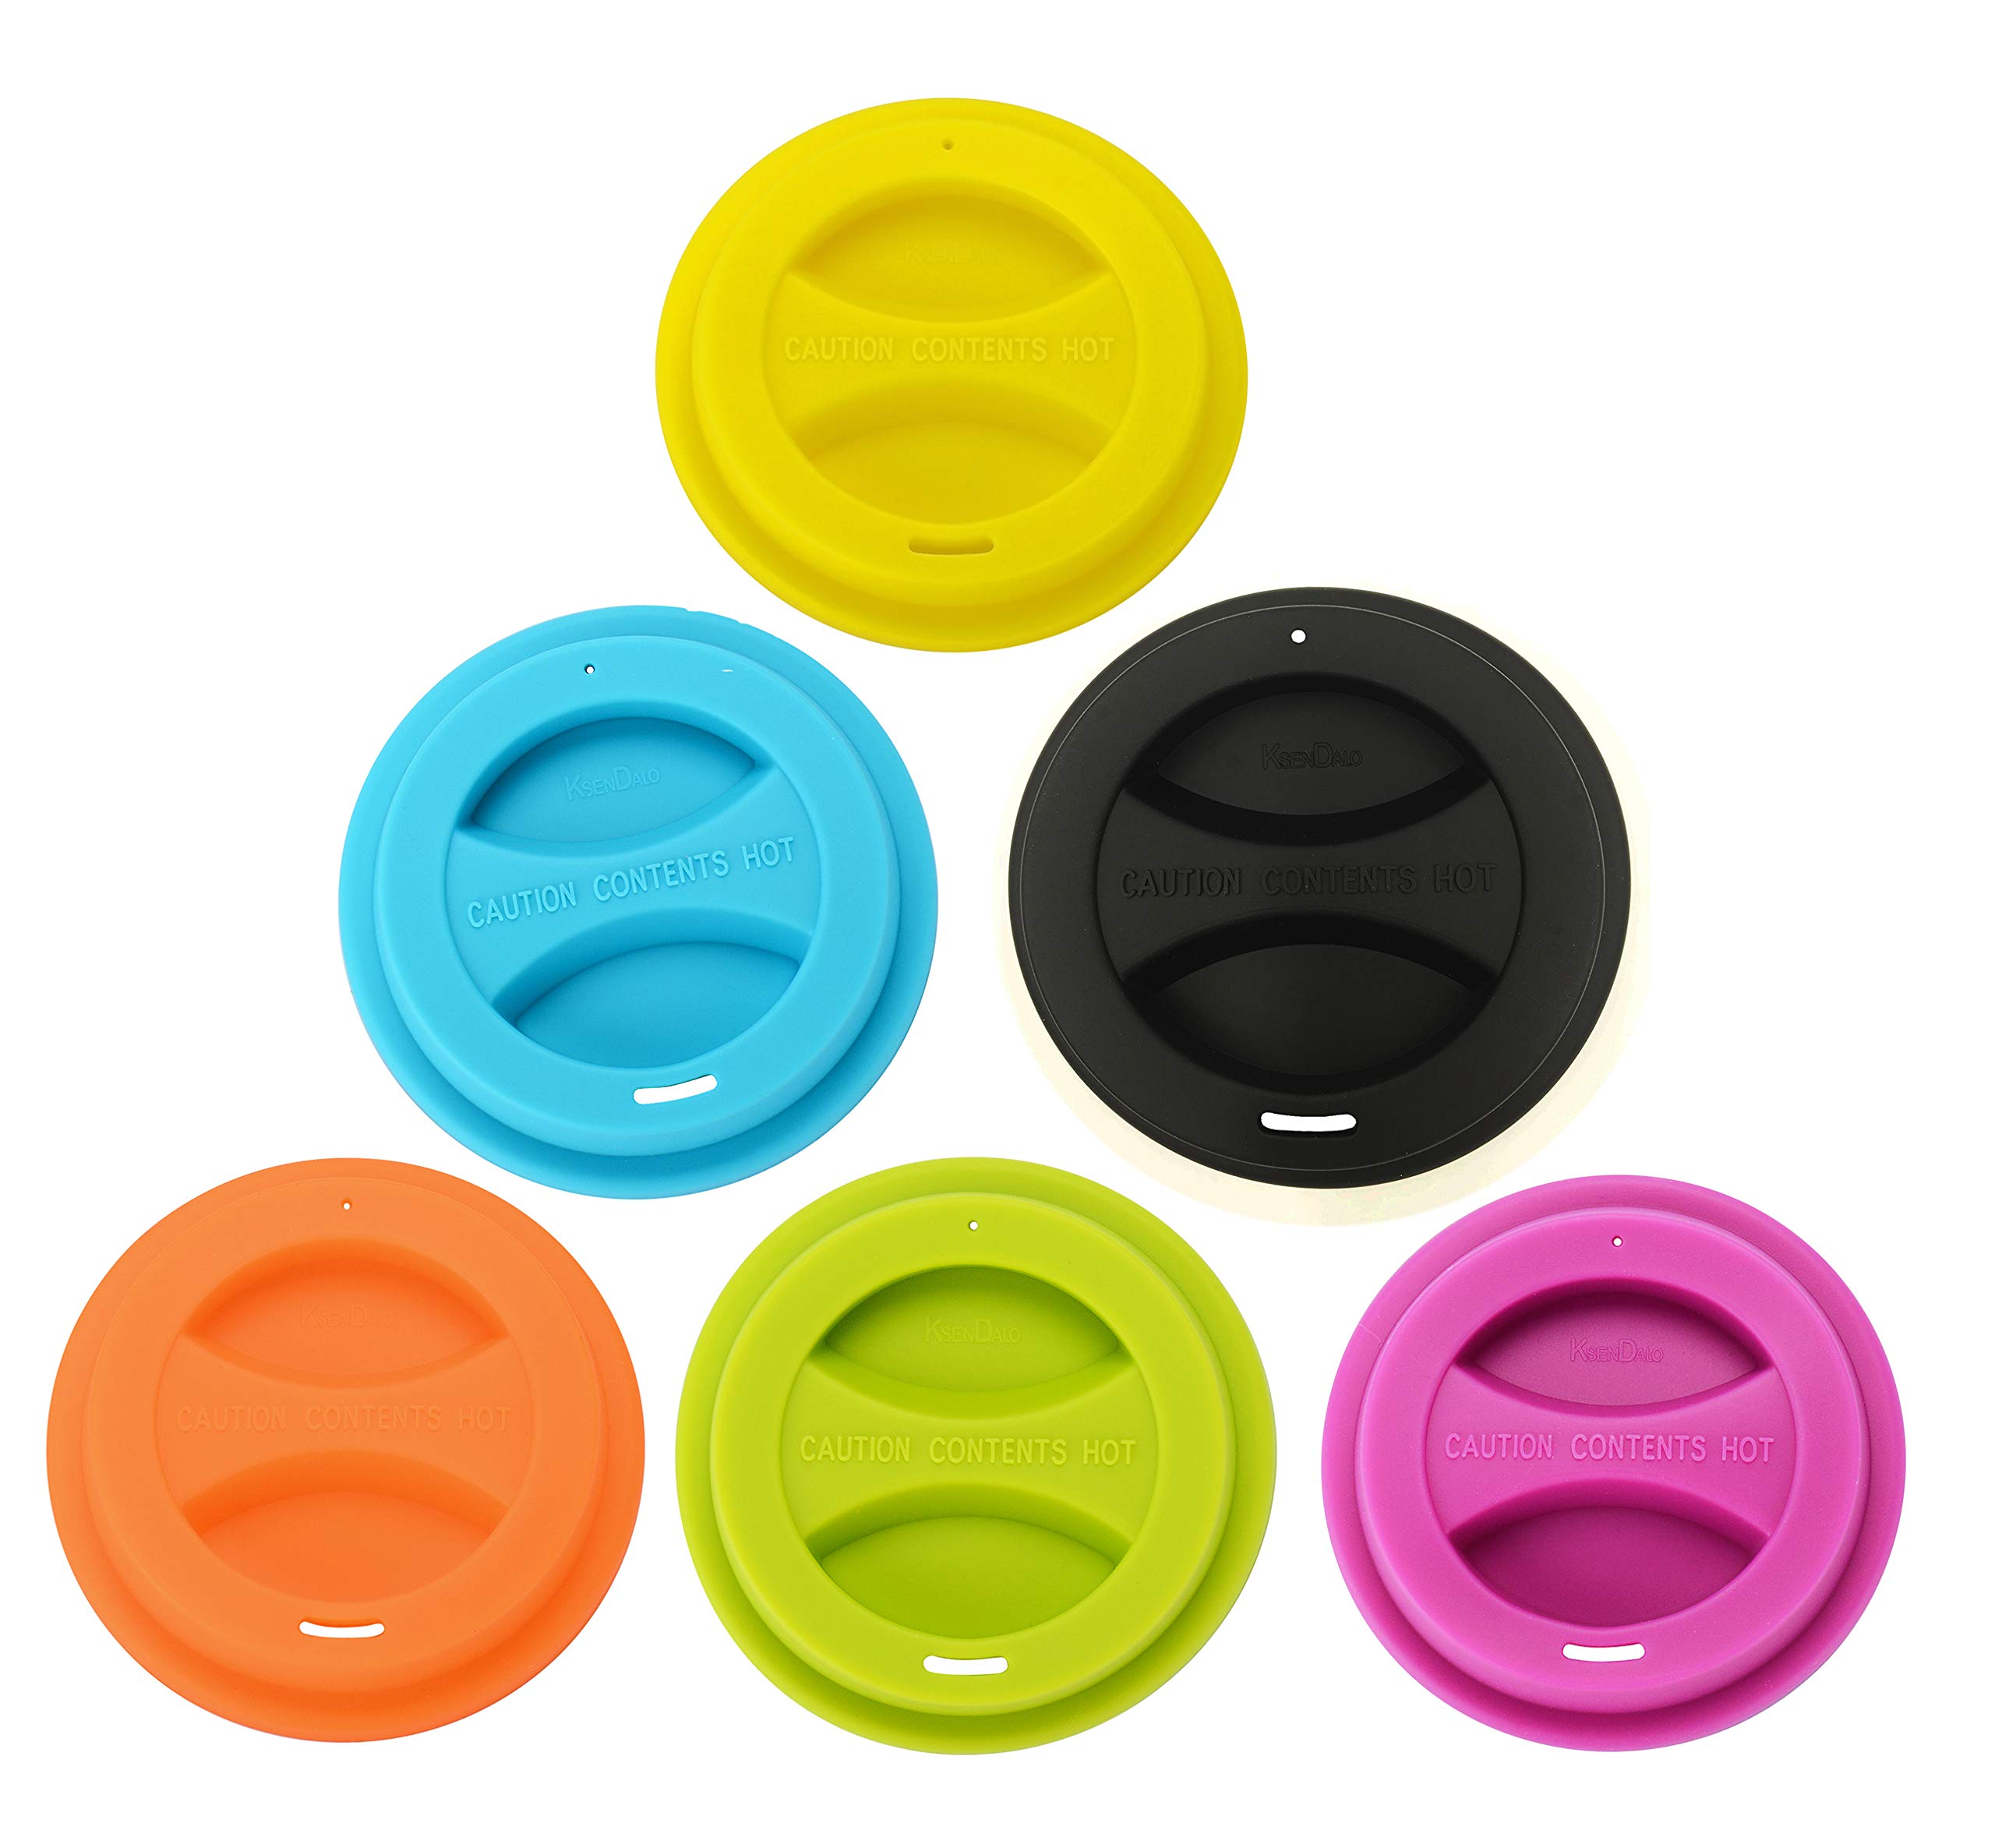 Coffee Mug Lids, KSENDALO Thicker Eco Reusable Silicone Travel Mug Lids(3.15"Inner Diameter,3.43"Outer Diameter), Silicone Cup Cover Set,Mix-color(7pcs)